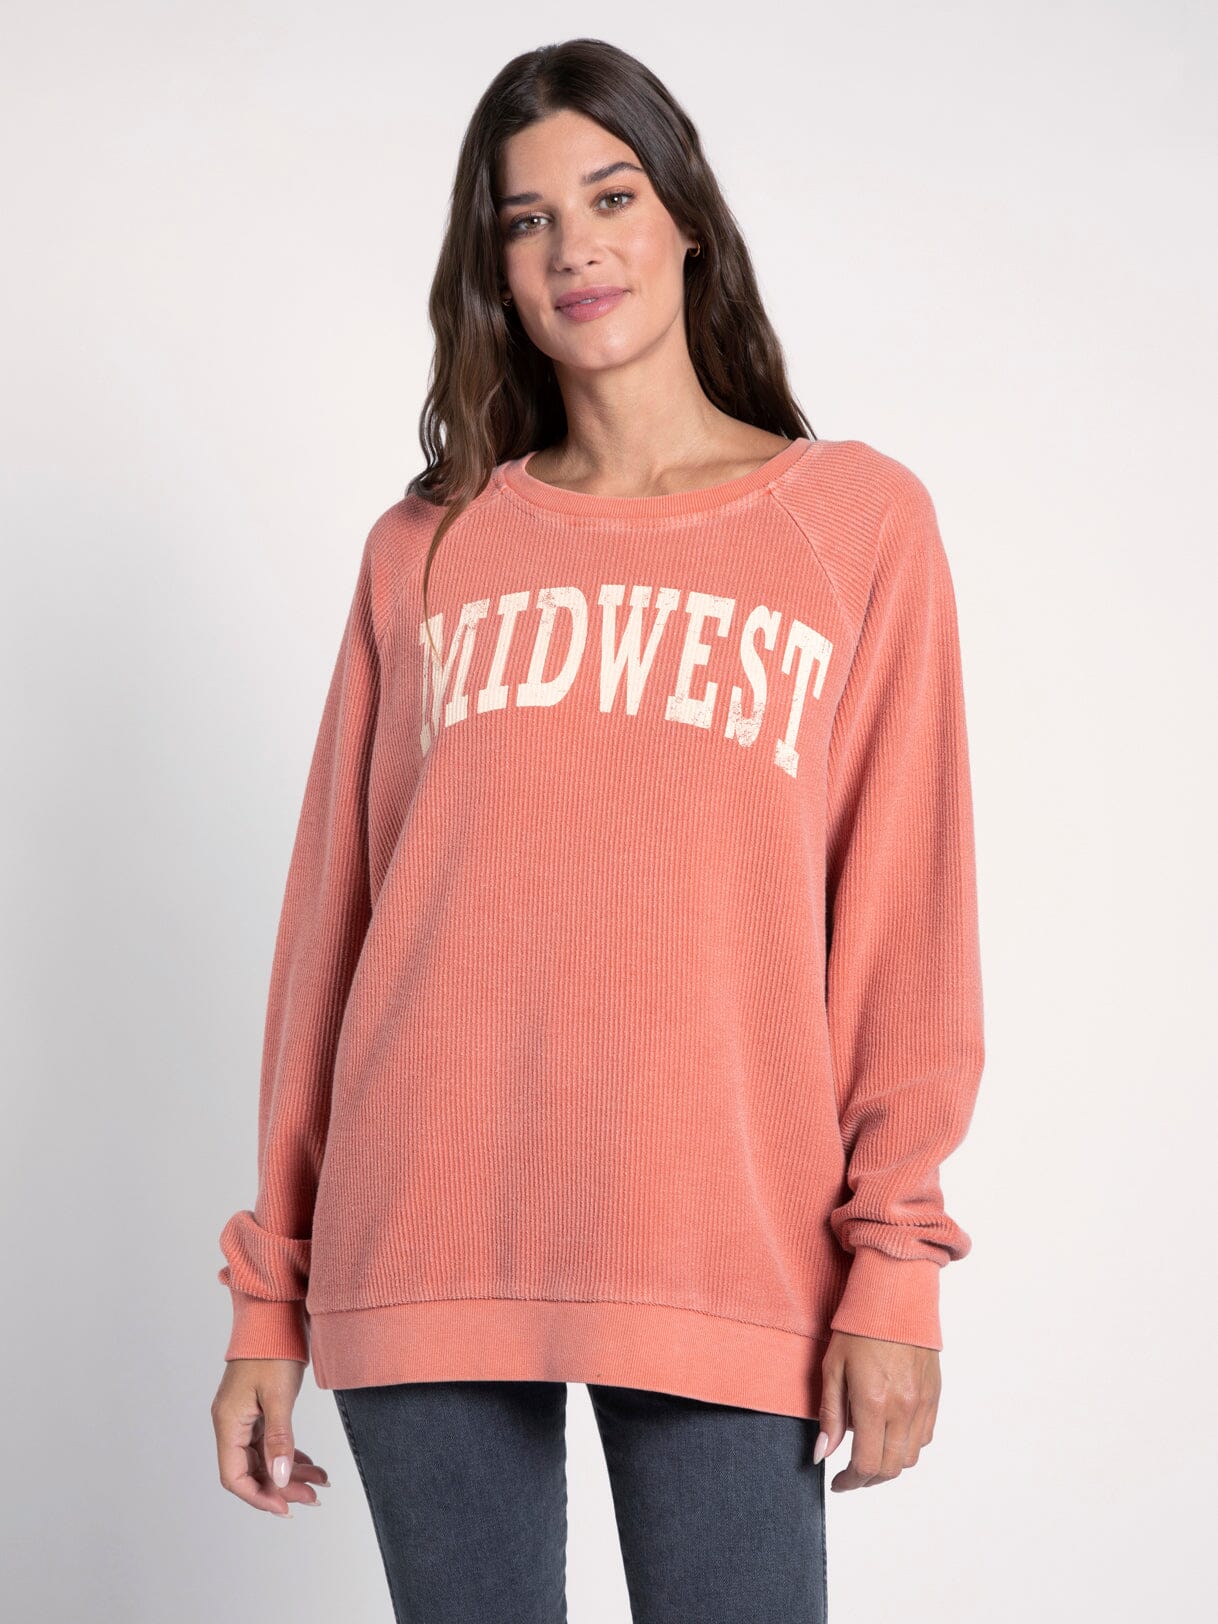 Midwest Raglan Sweatshirt